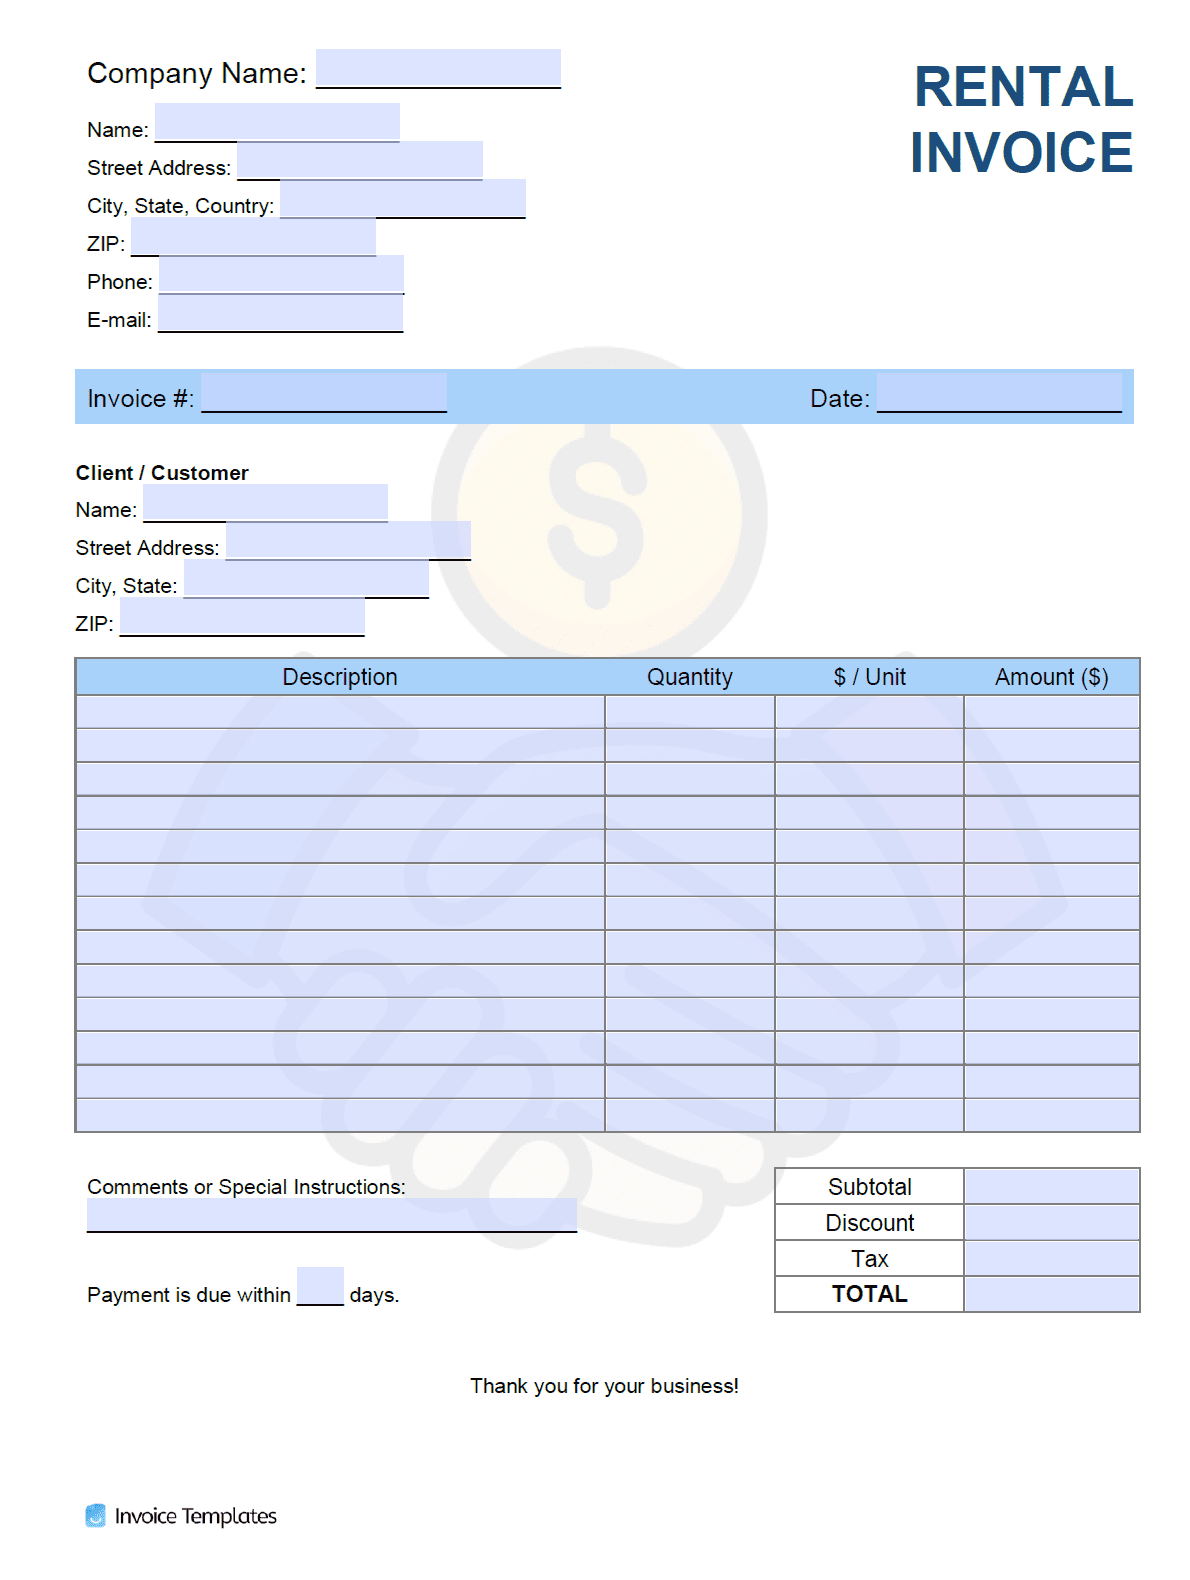 rental-invoice-template-pdf-word-excel